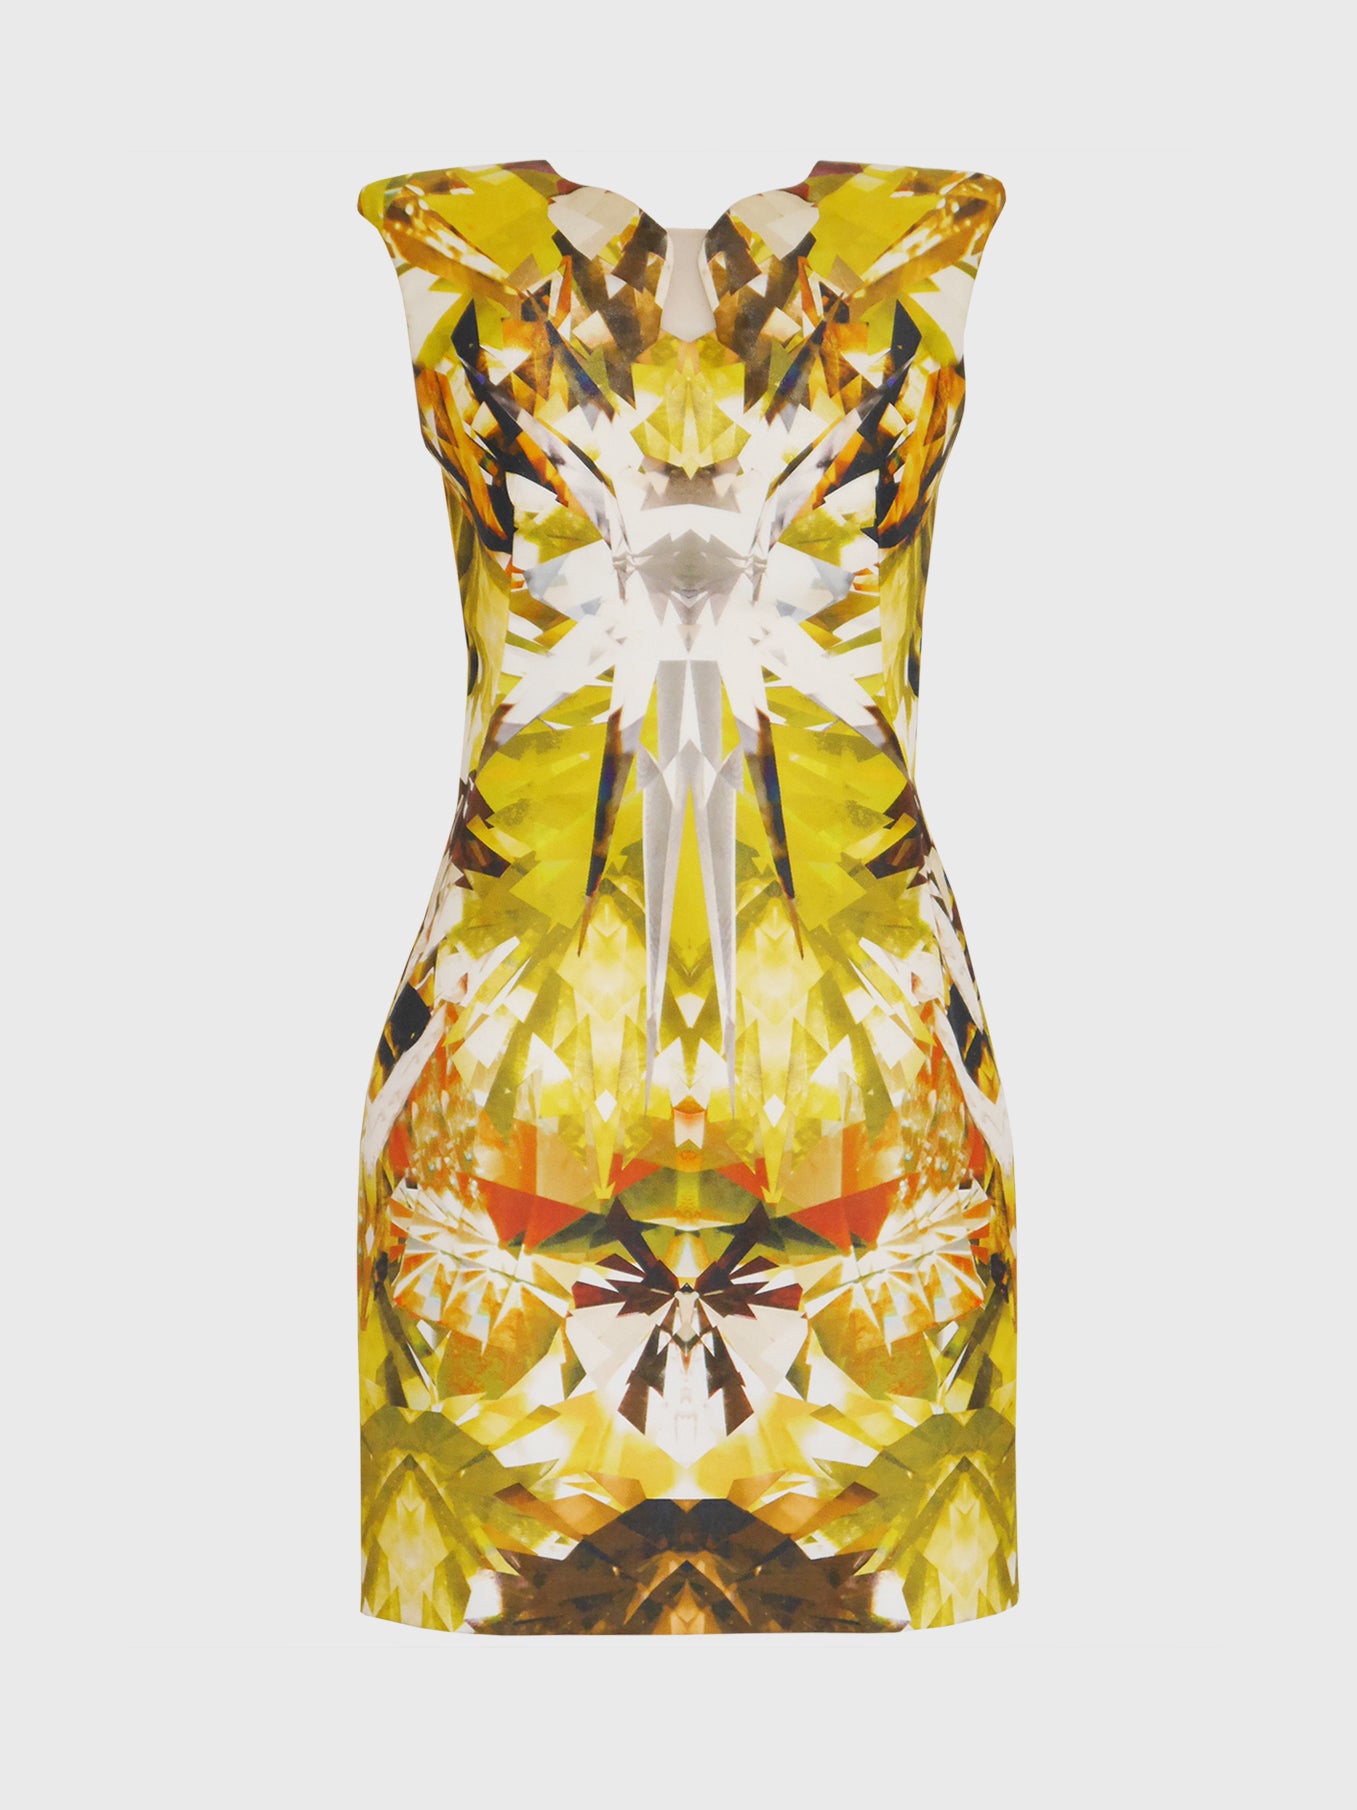 ALEXANDER MCQUEEN Spring 2009 Vintage Crystal Kaleidoscope Print Dress